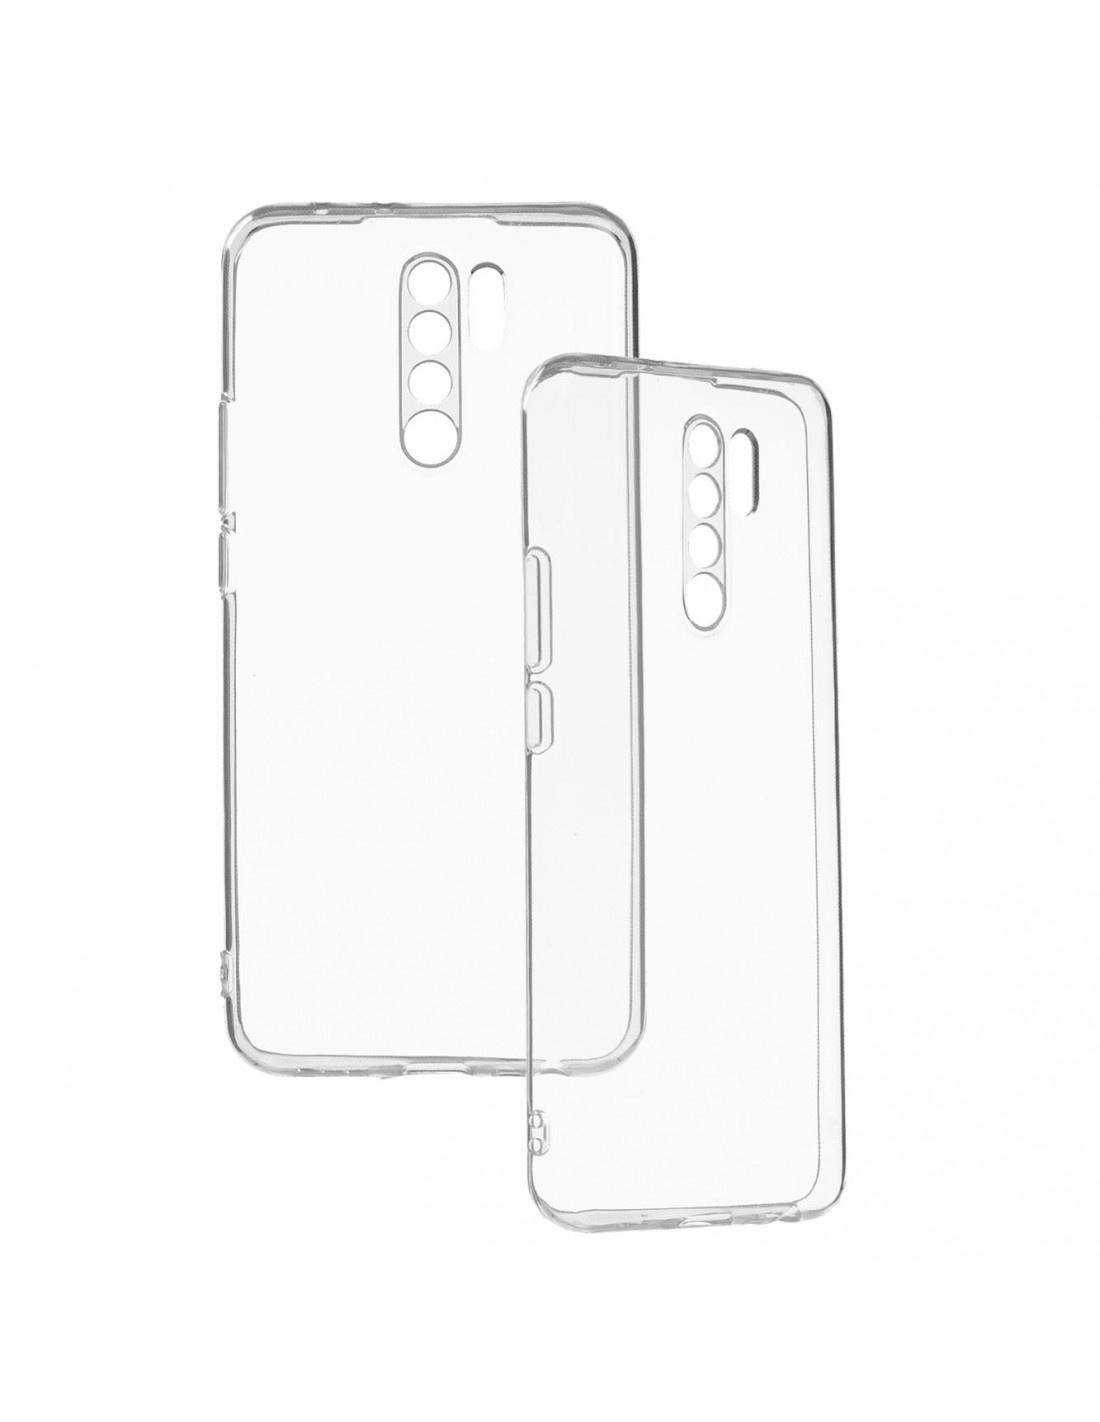 Xiaomi Redmi 9 Funda Gel Tpu Silicona transparente dibujo Cactus